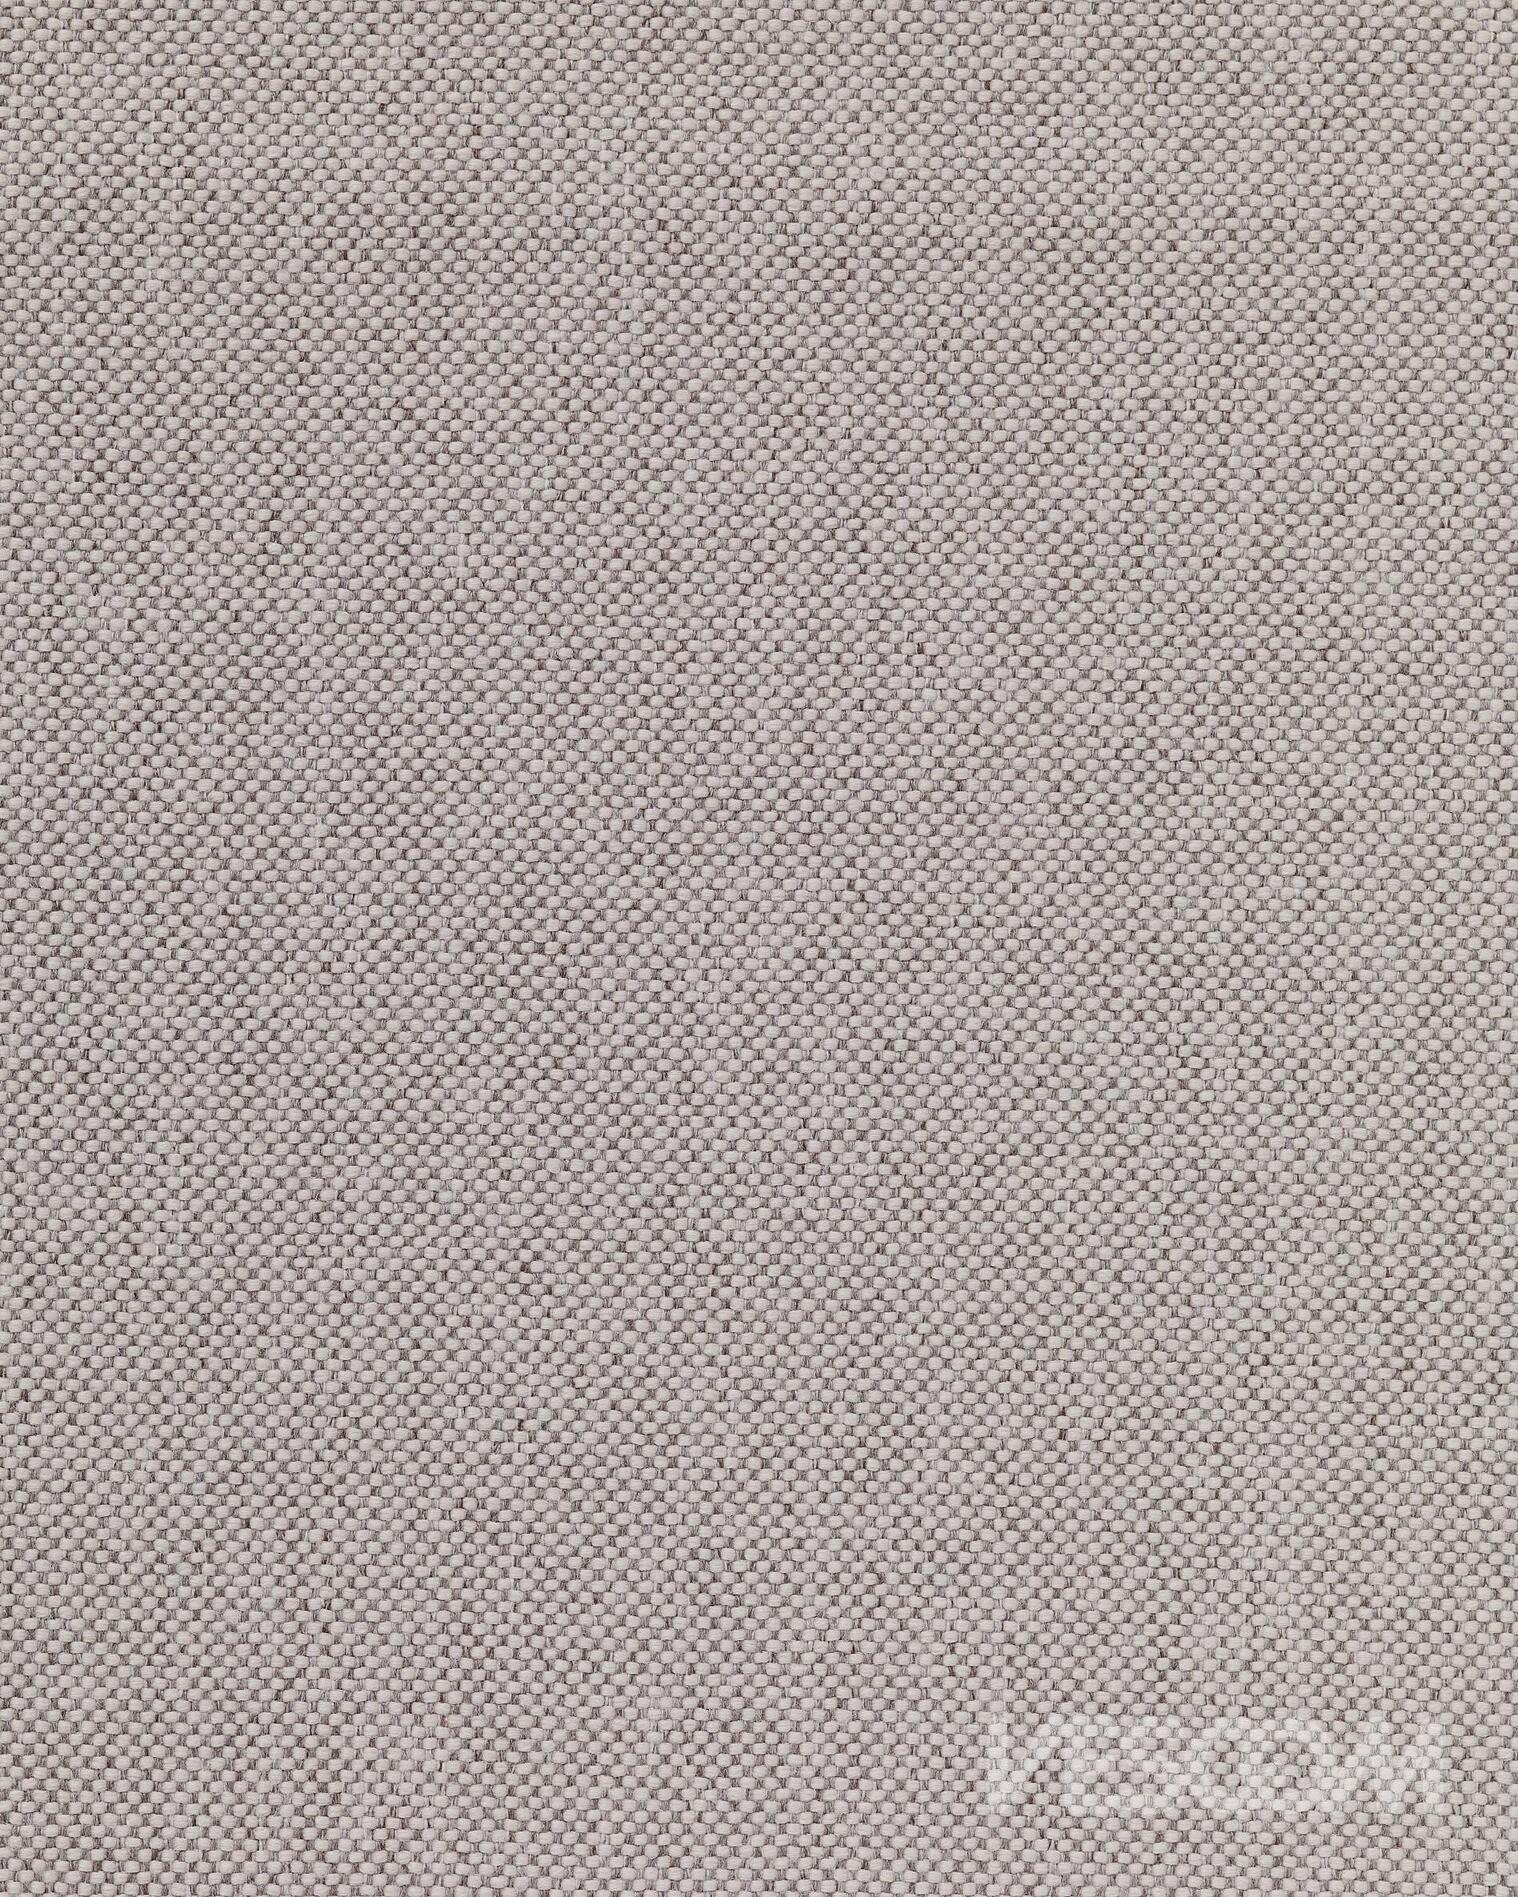 vescom-acton-upholstery-fabric-7062-08